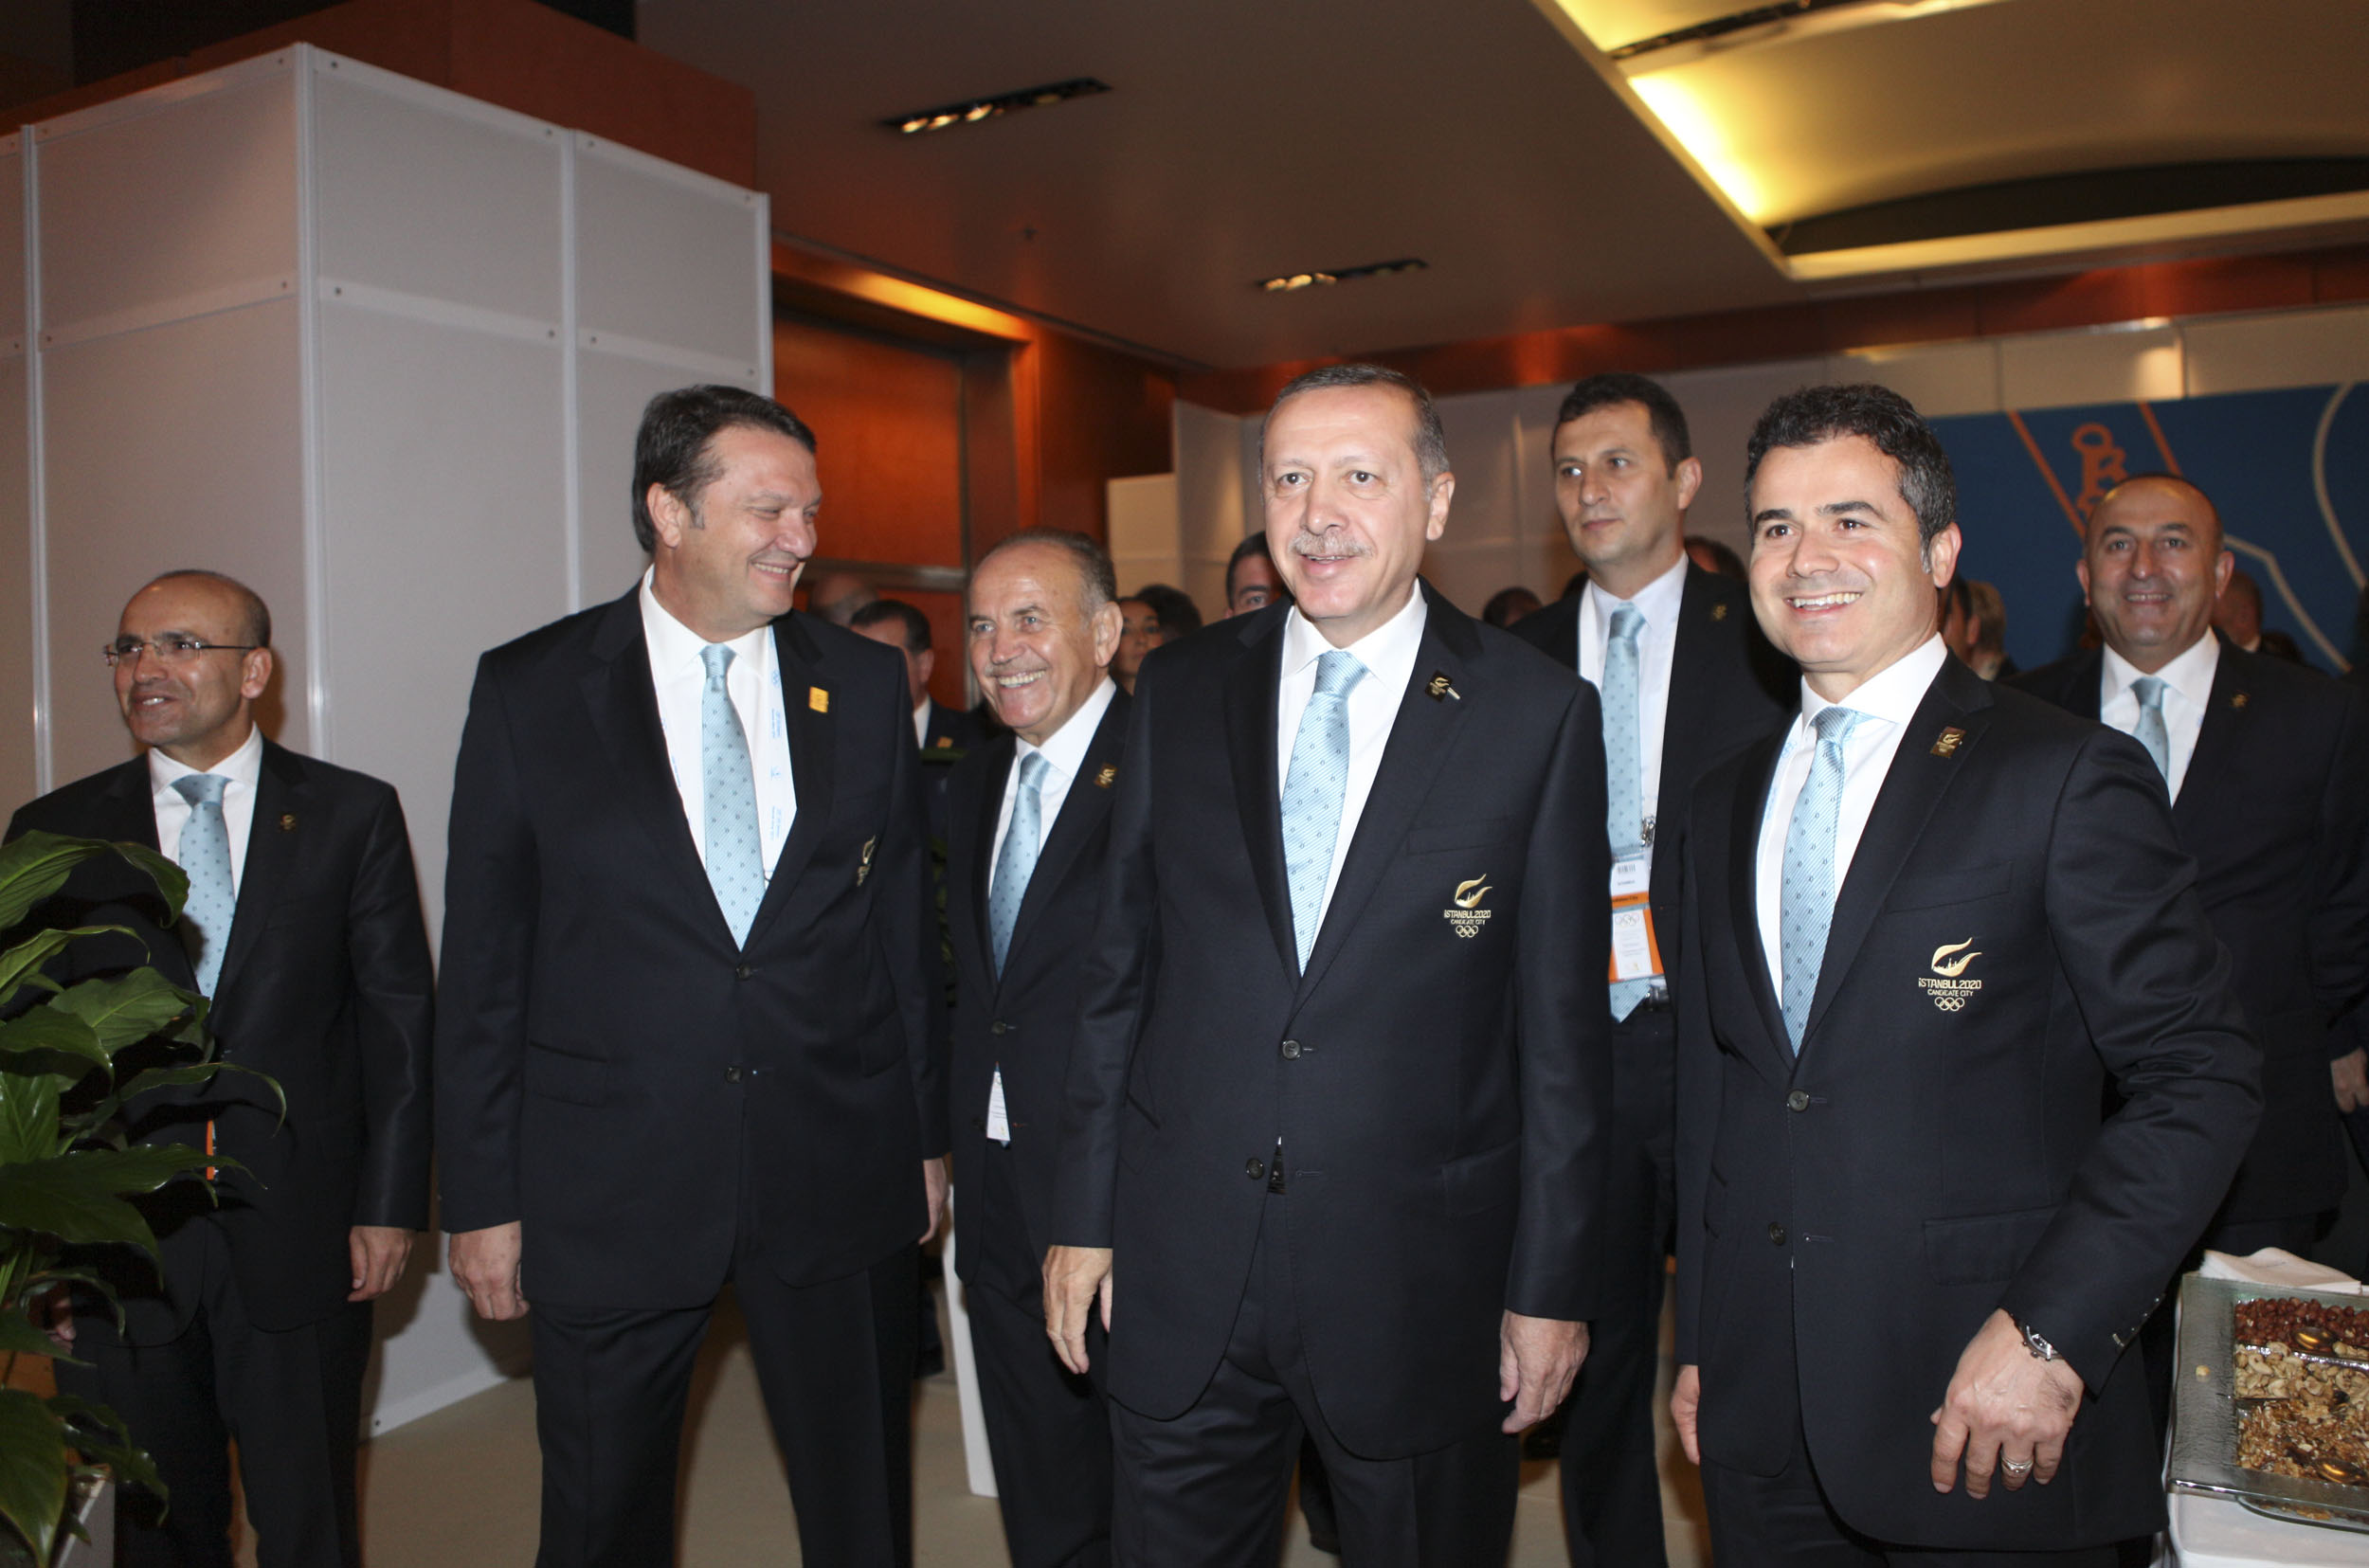 Turkish Prime Minister Recep Tayyip Erdogan alongside the 2020 team